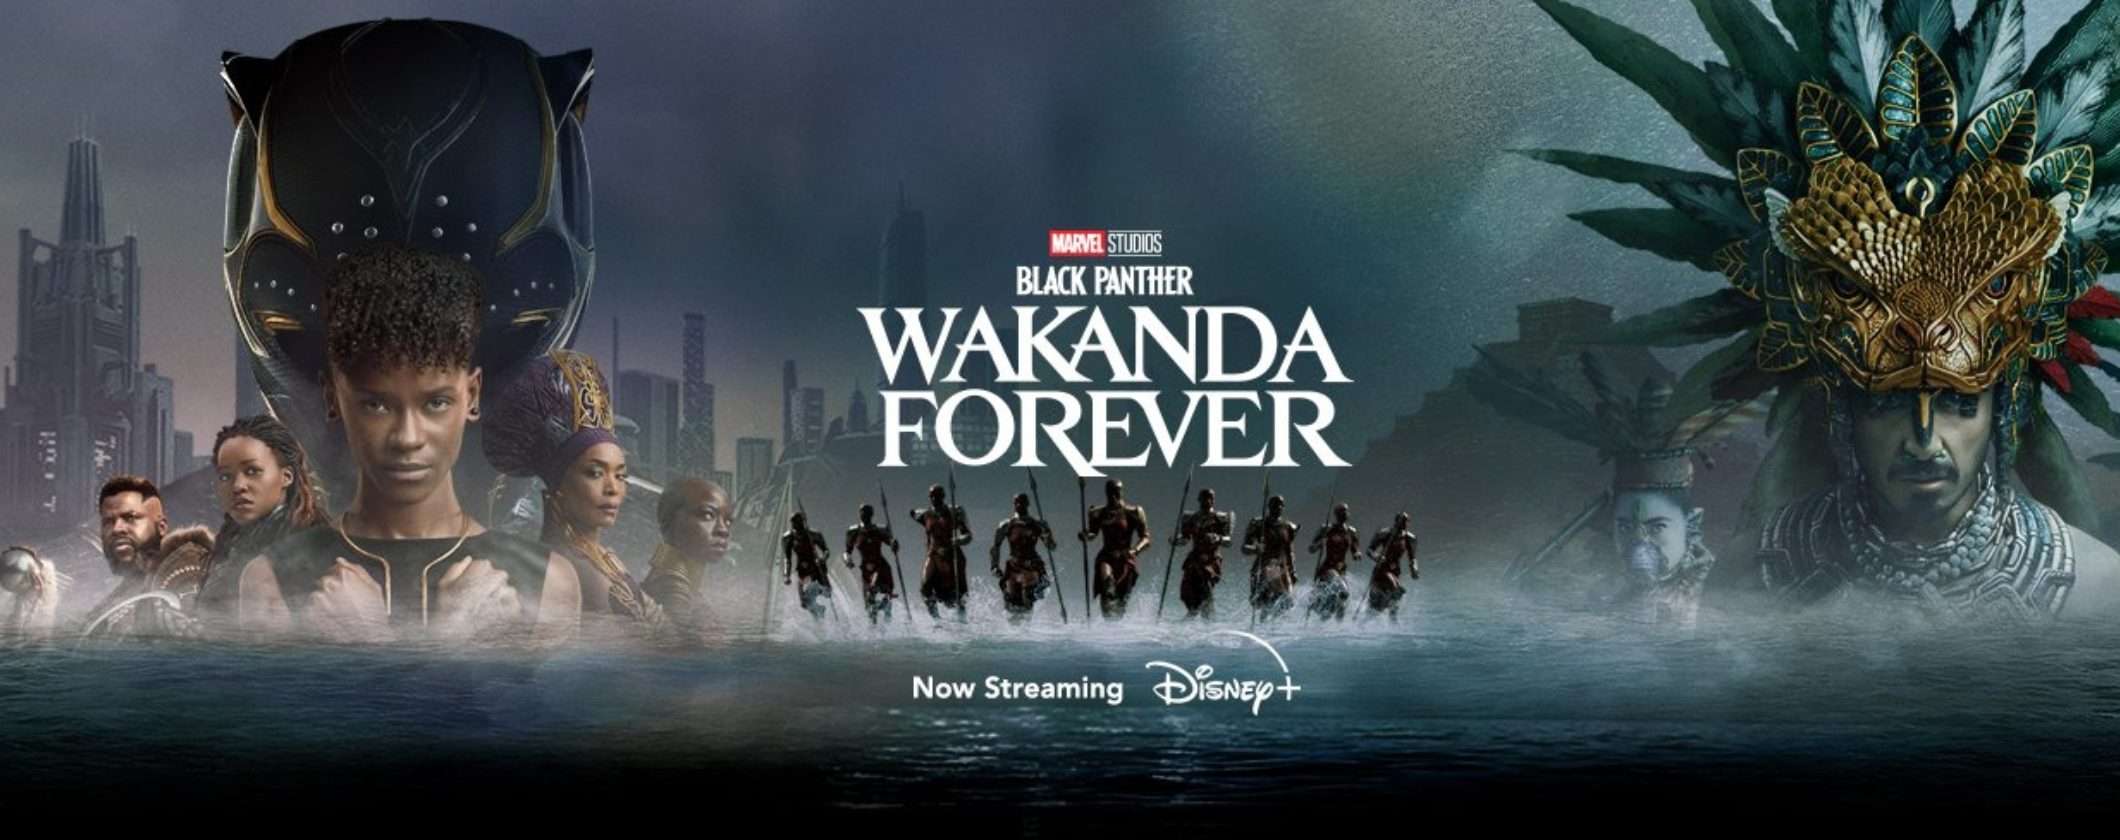 Black Panther: Wakanda Forever, un cast stellare da godere su Disney+